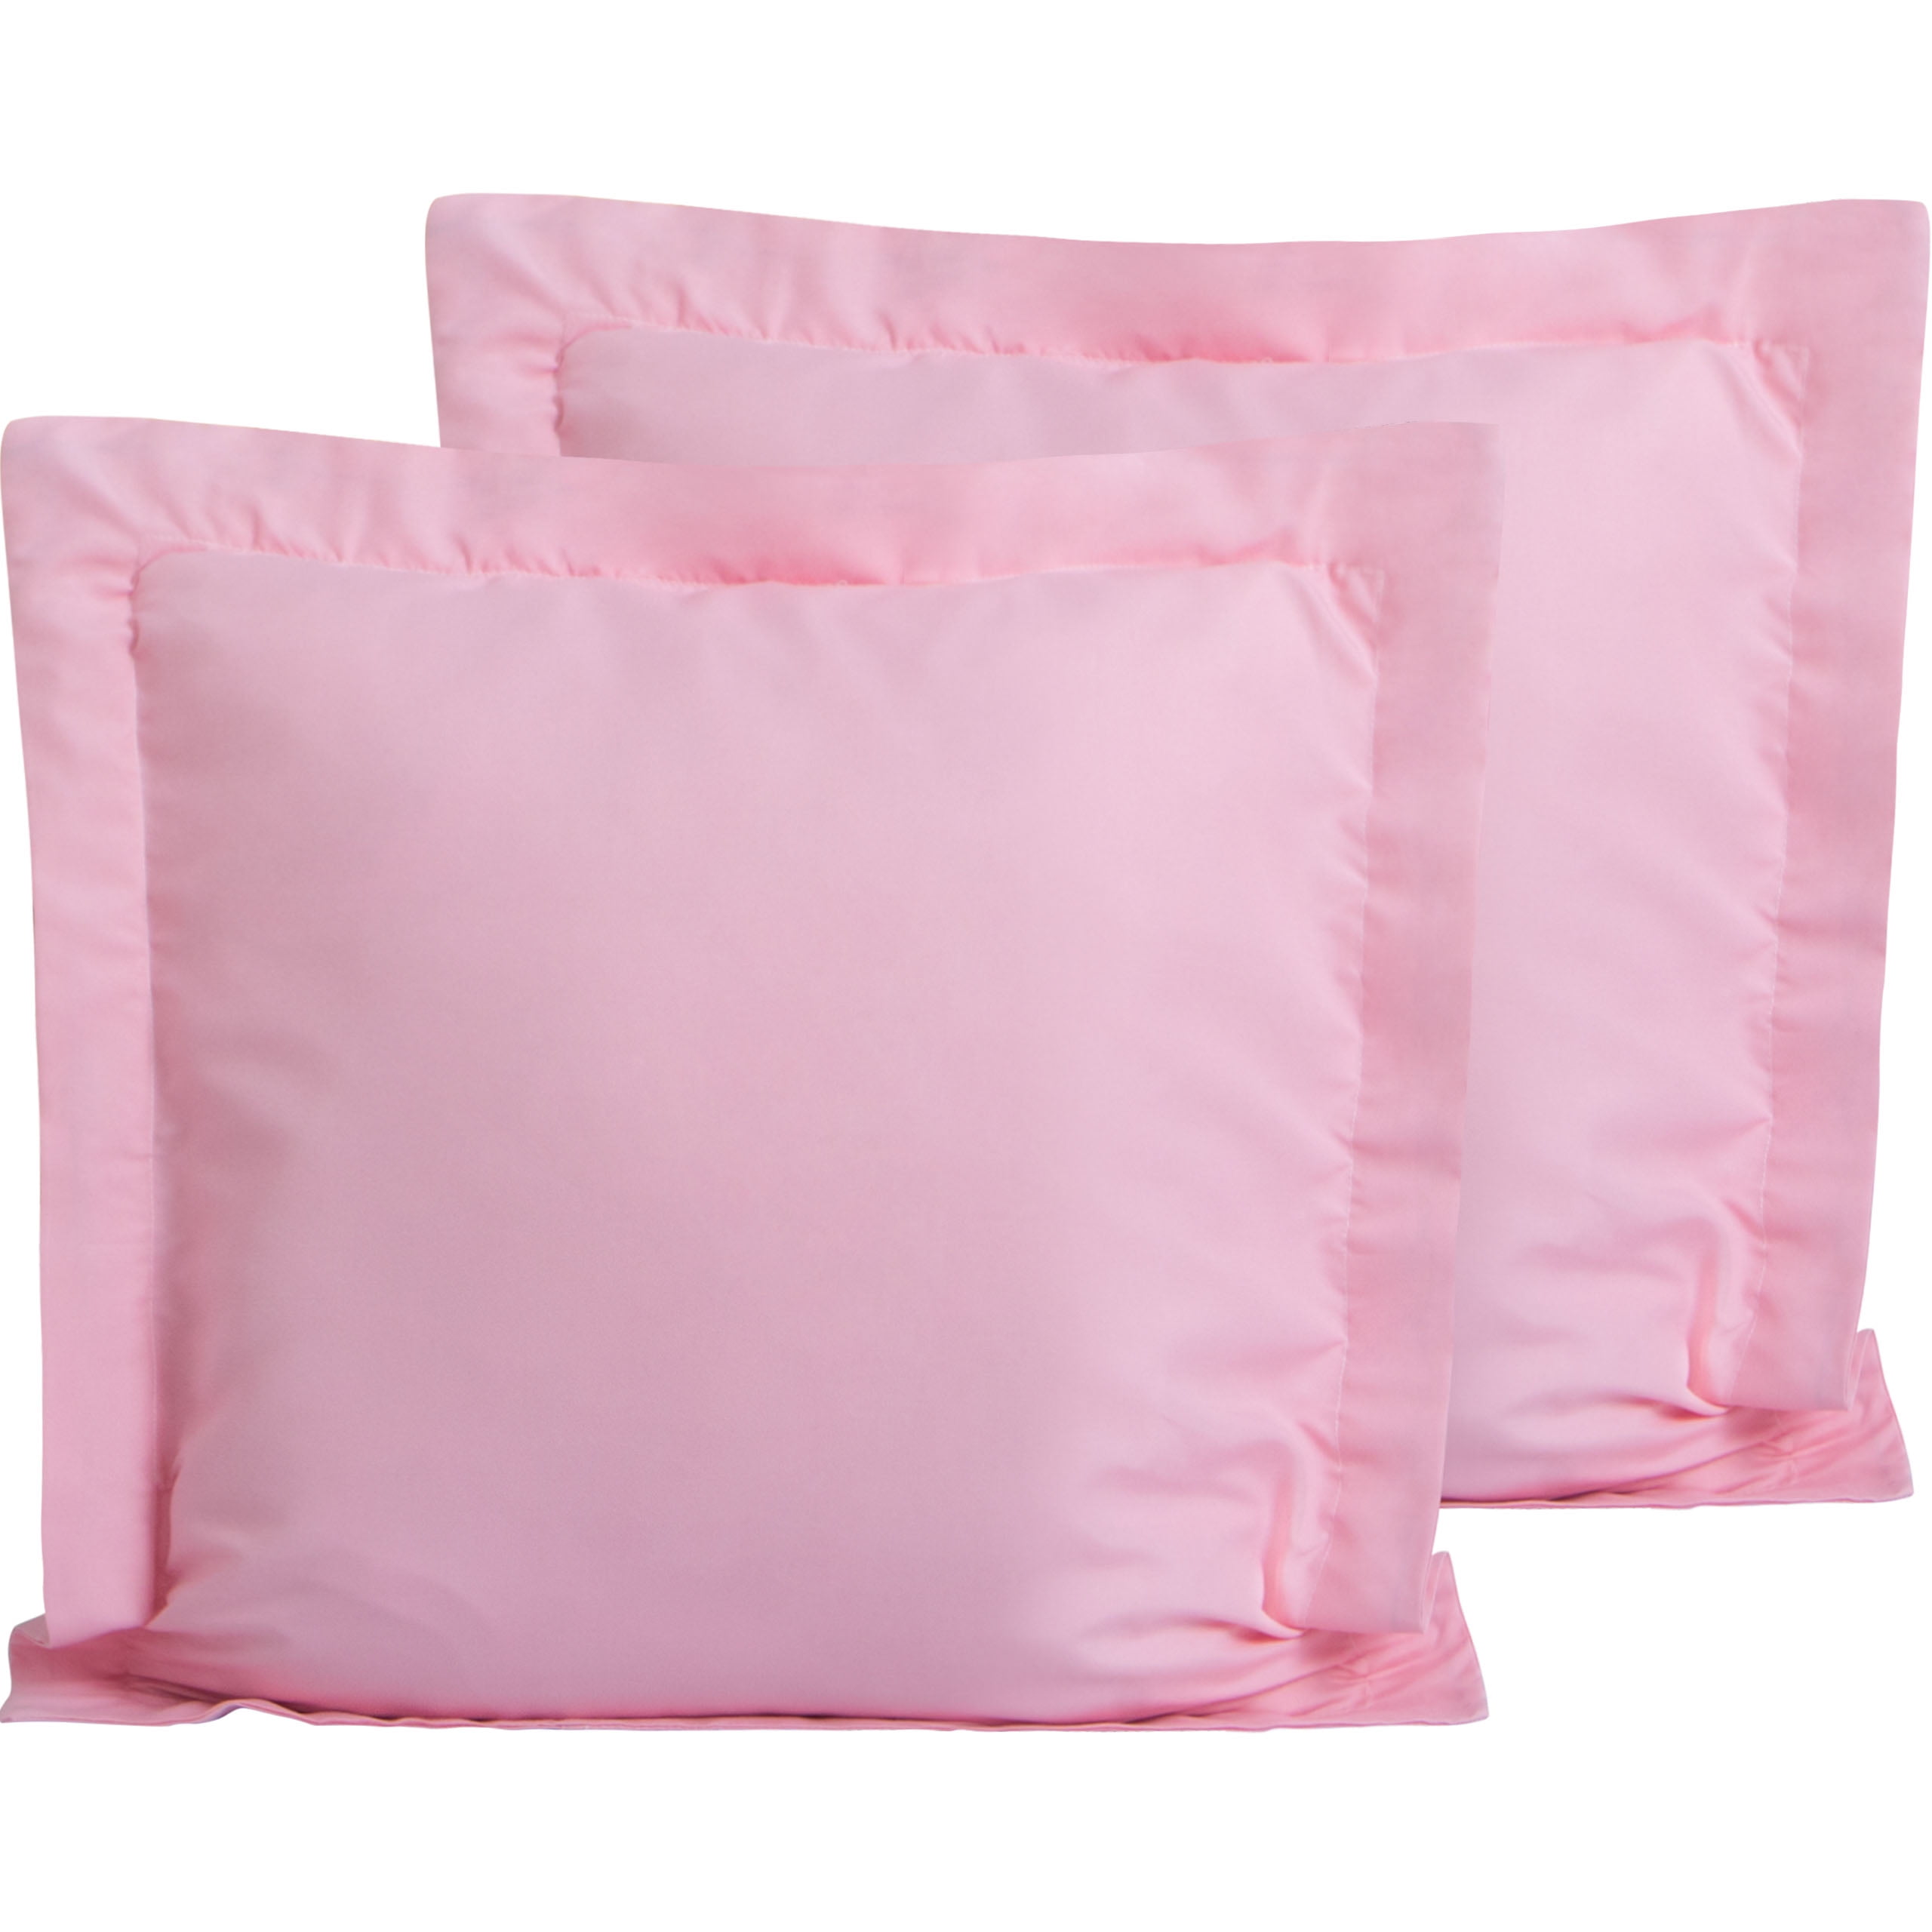 FLXXIE 2 Pack Microfiber European Pillow Shams Ultra Soft and Premium Quality 26 x 26 Navy Blue, Euro 